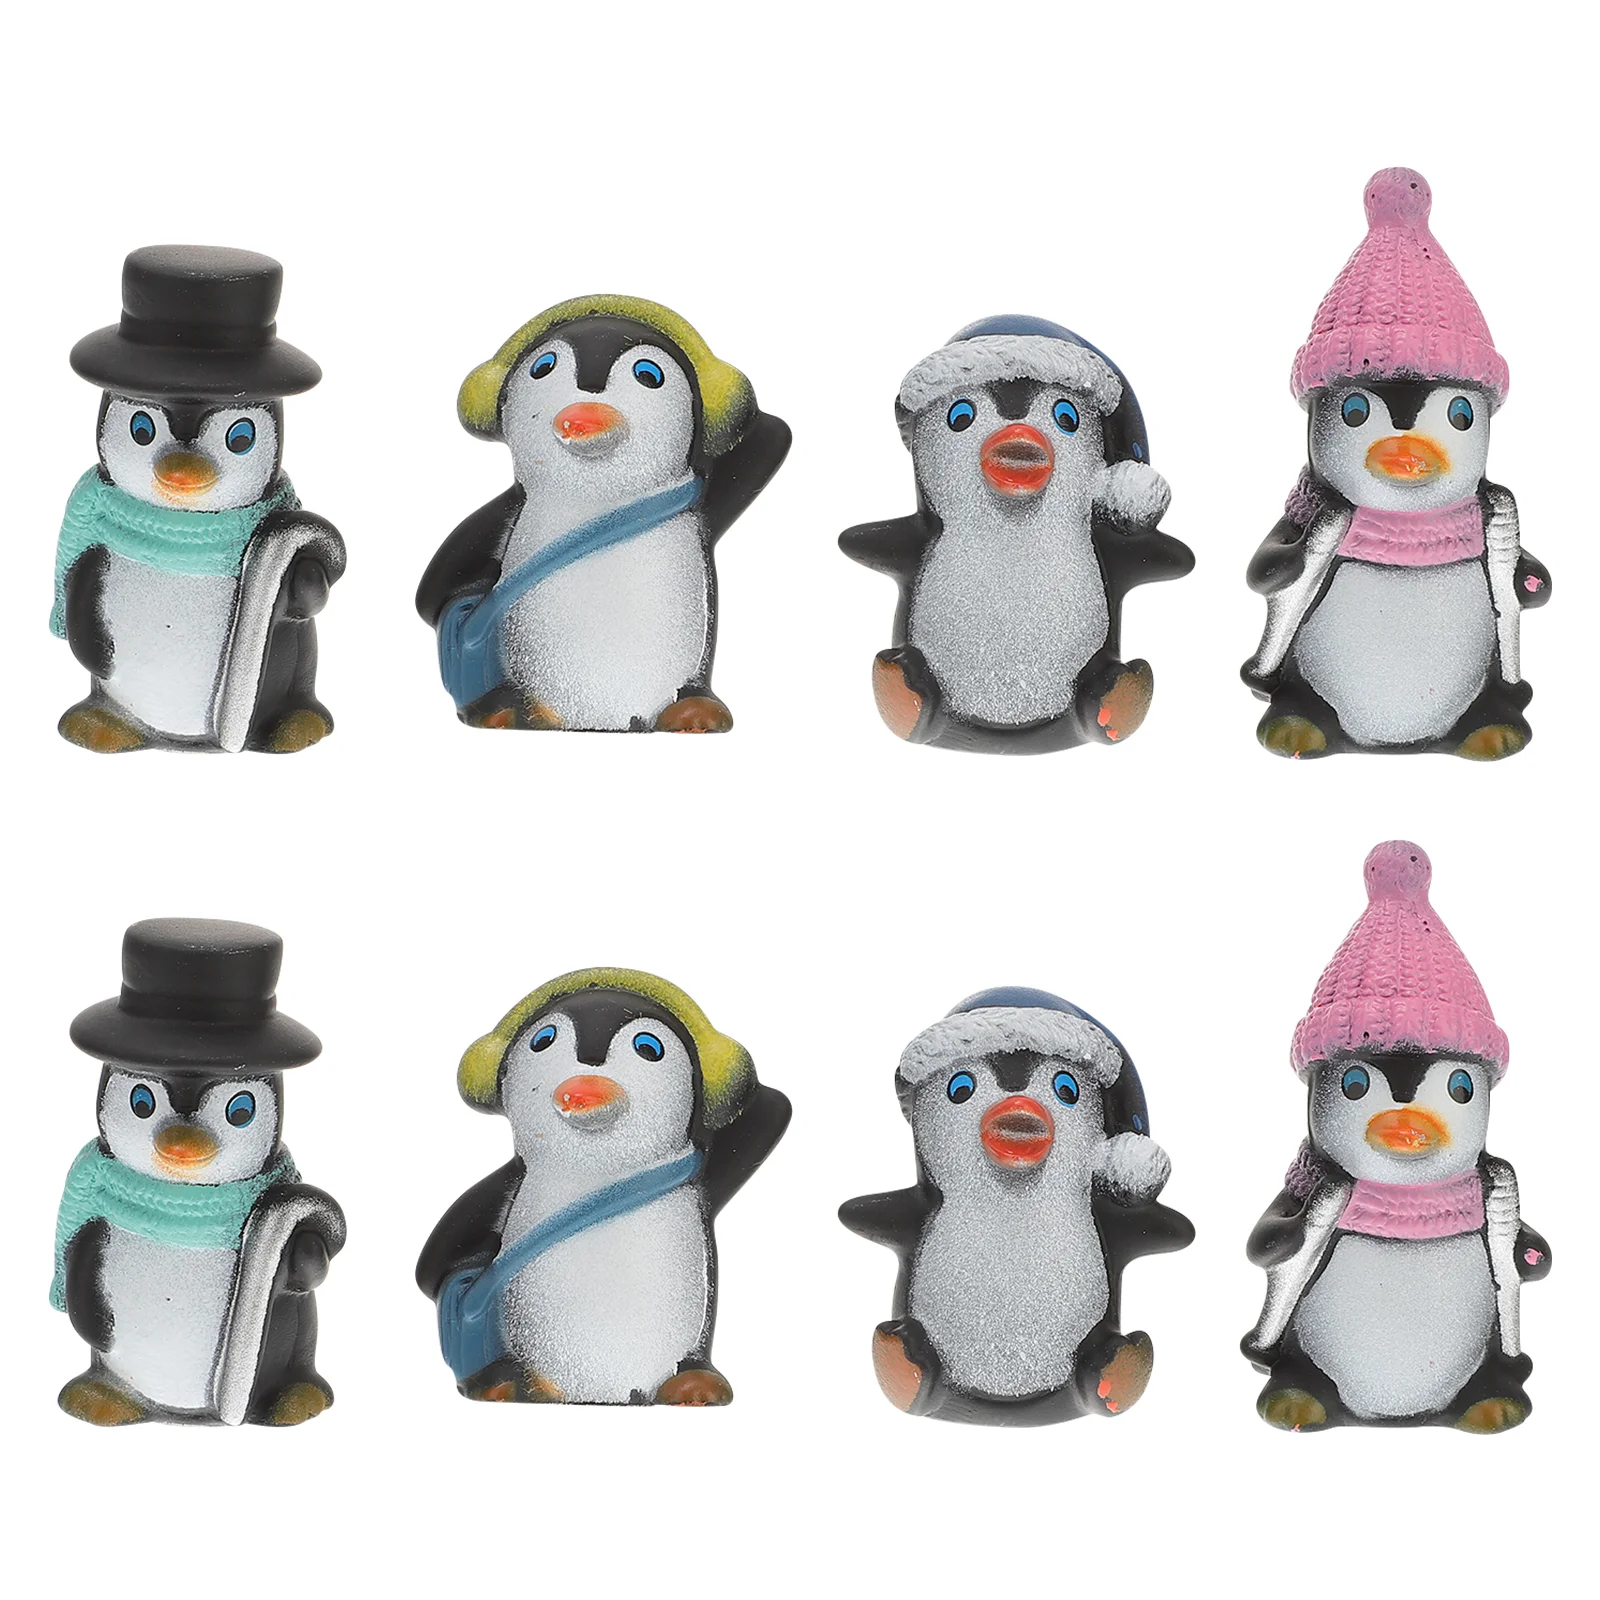 

Penguin Mini Figurines Decor Toysanimal Bonsai Cartoon Ornament Decorations Characters Miniature Party Desktop Figure Lanscape